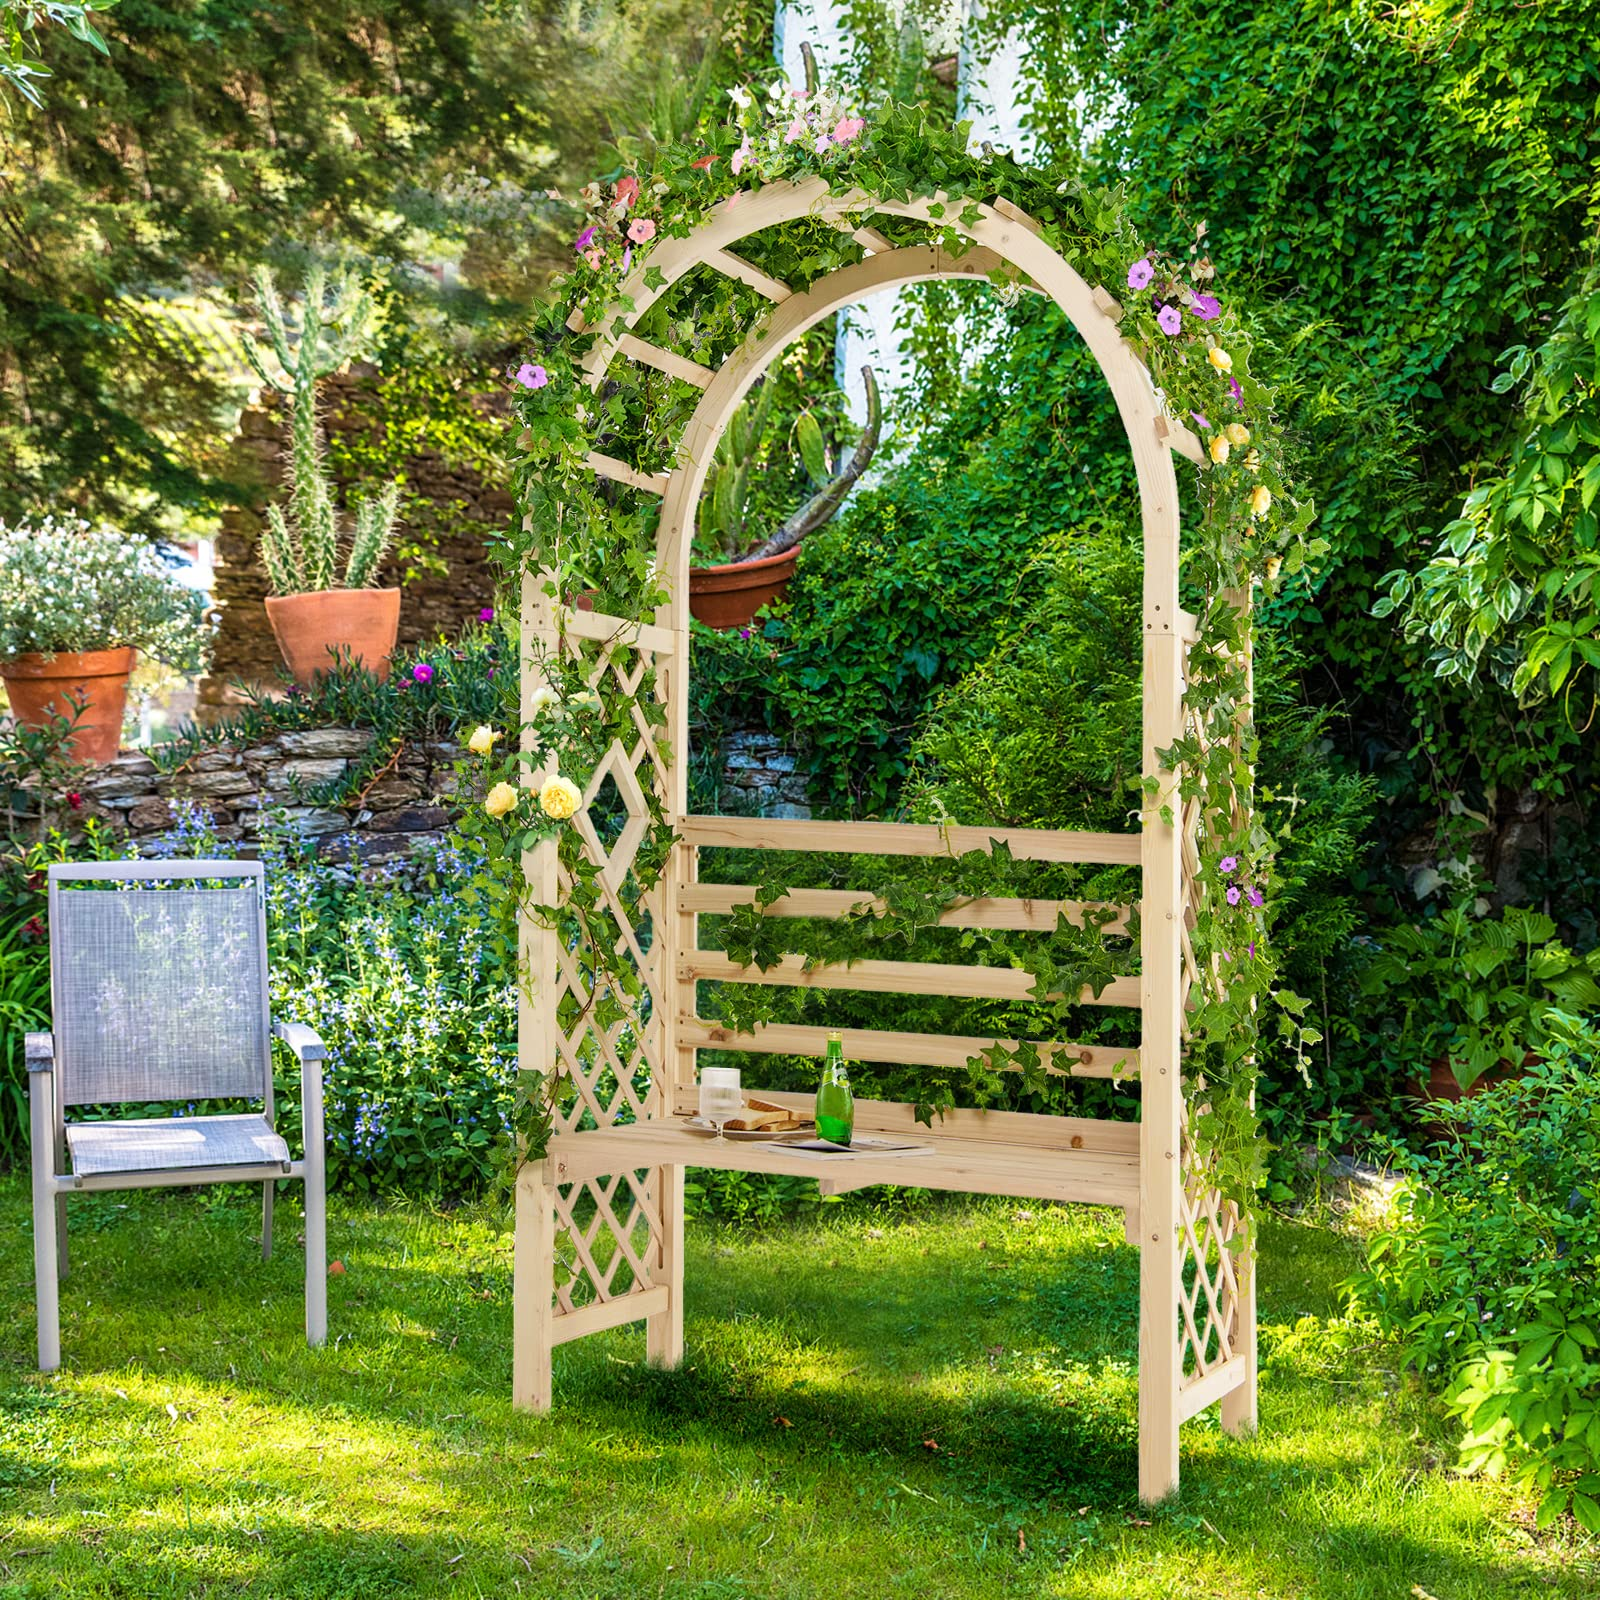 Giantex 81in Garden Arch with 2-Person Bench, Wooden Garden Arbor Archway Trellis for Climbing Plants